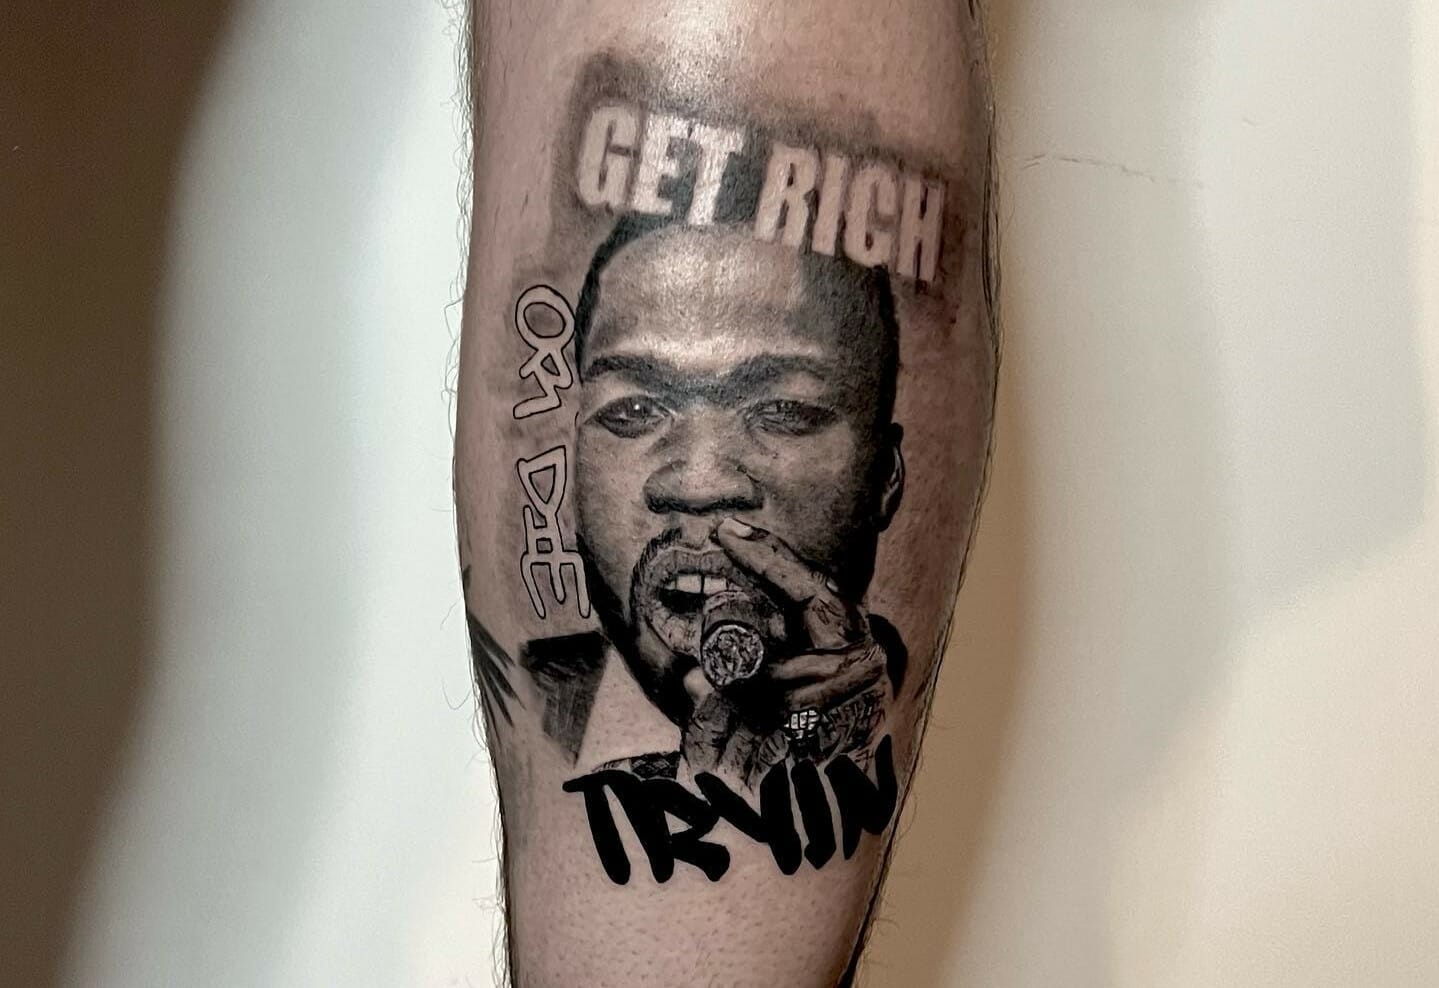 Rich risk tatooTikTok Search